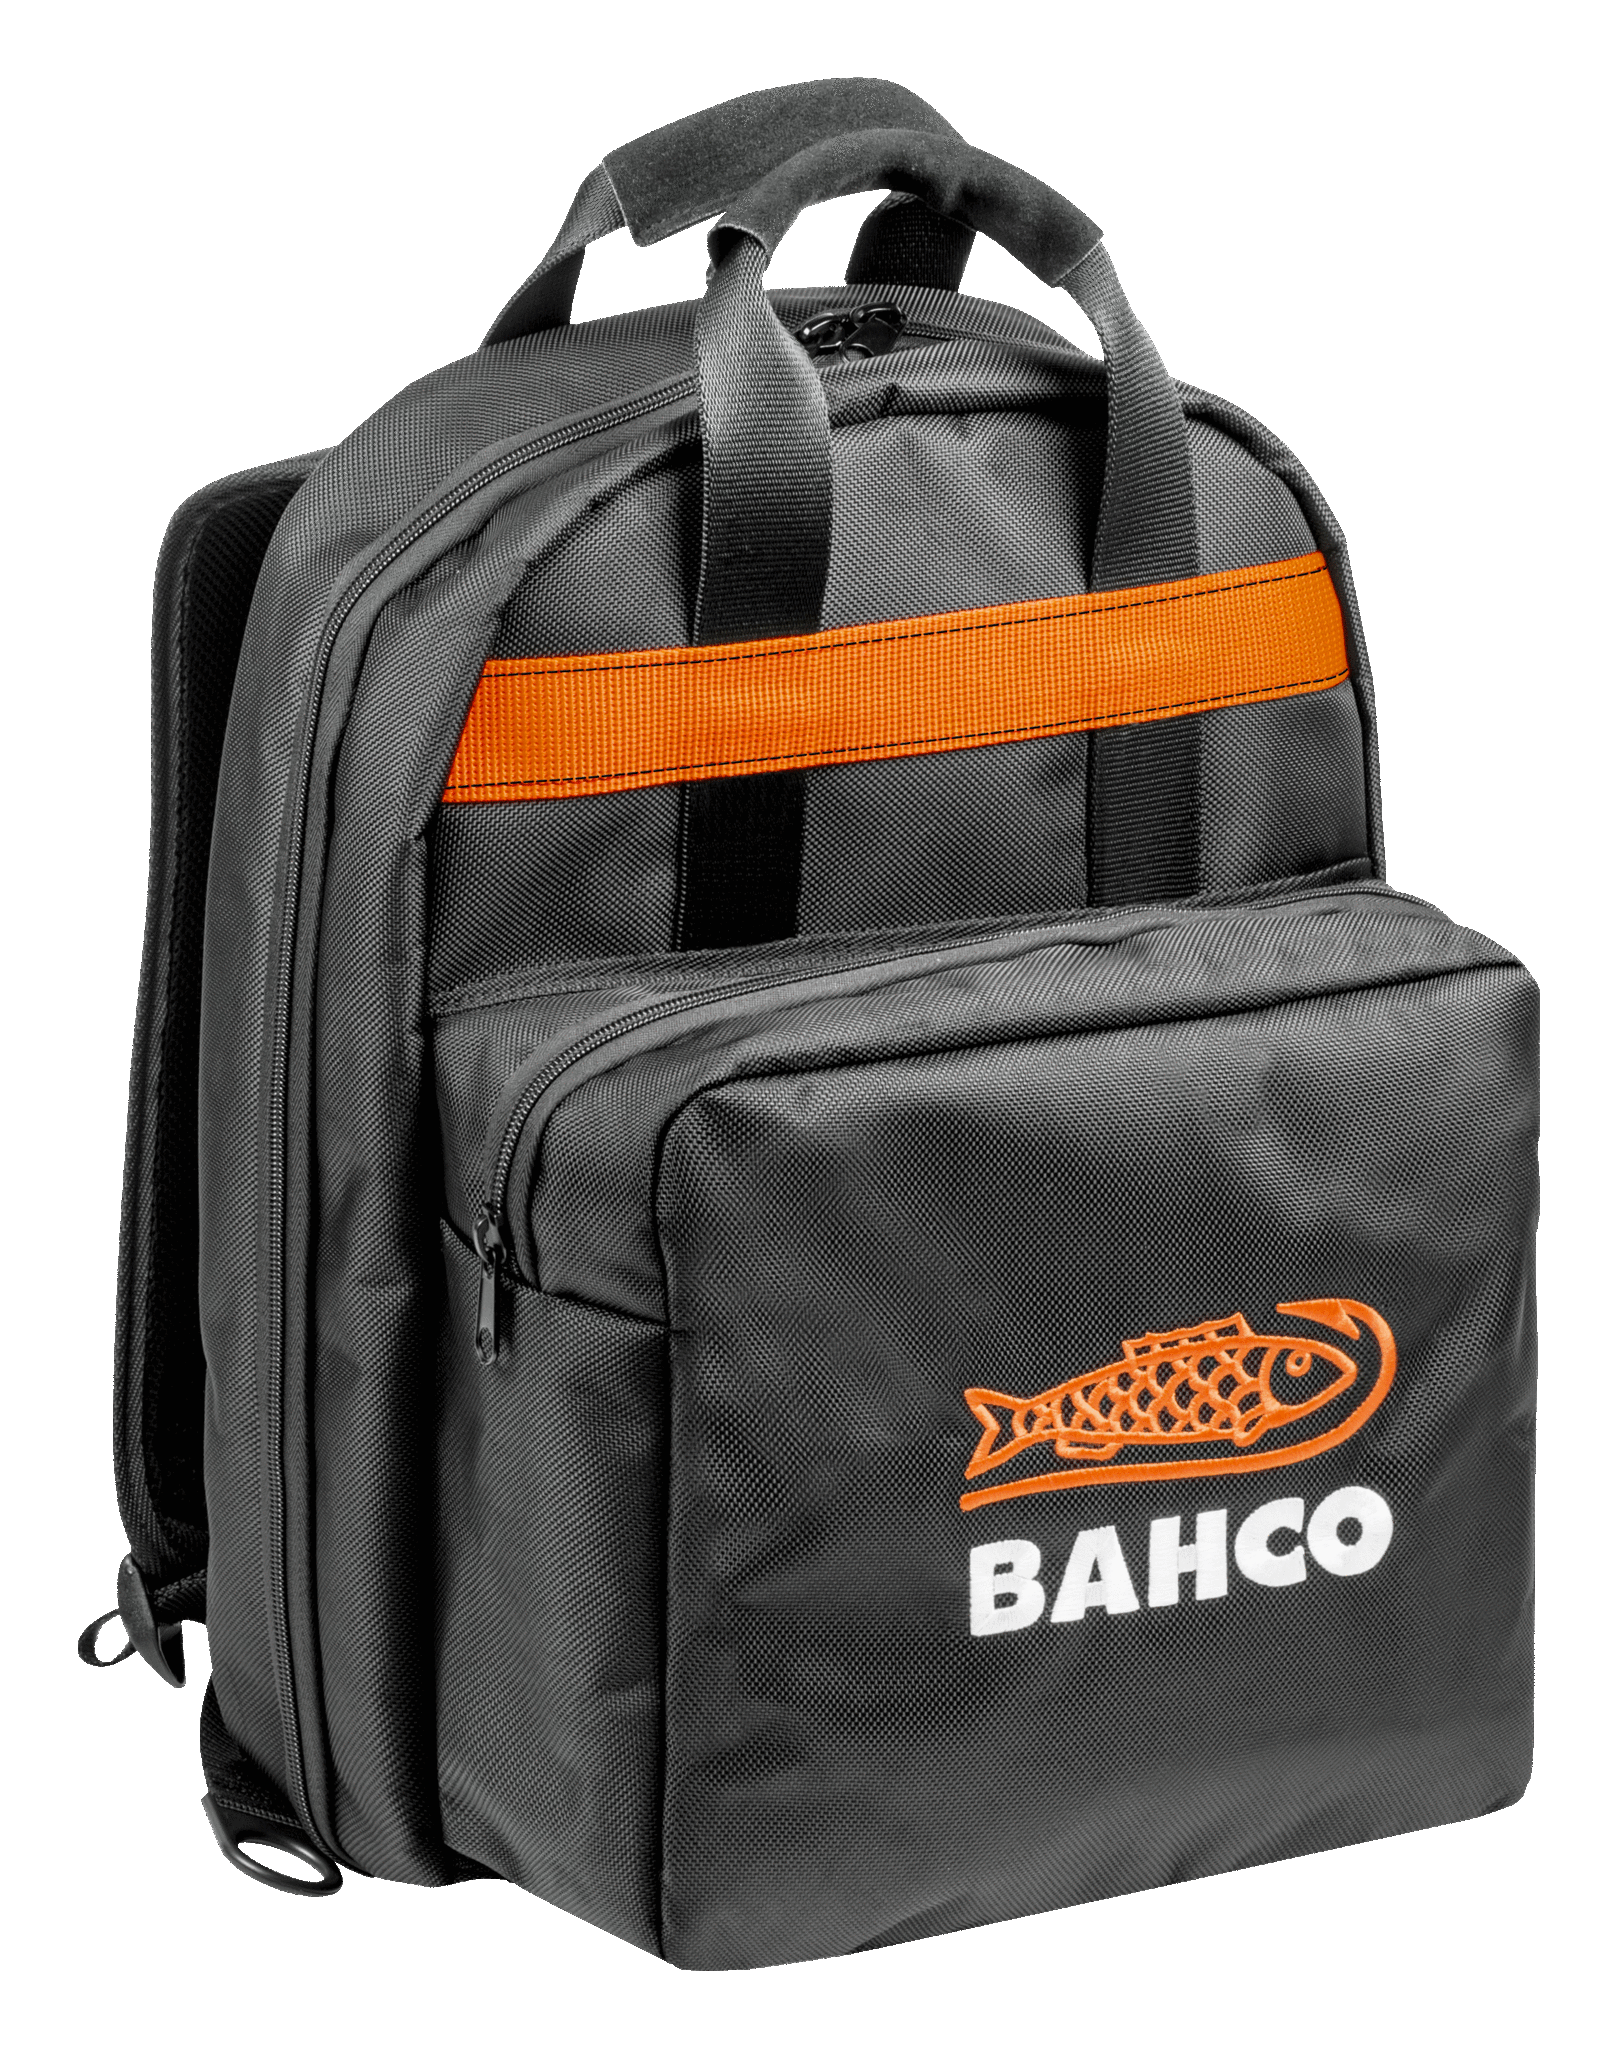 BAHCO(バーコ) Back Pack リュックサック ラージ 3875-BP2 - 2